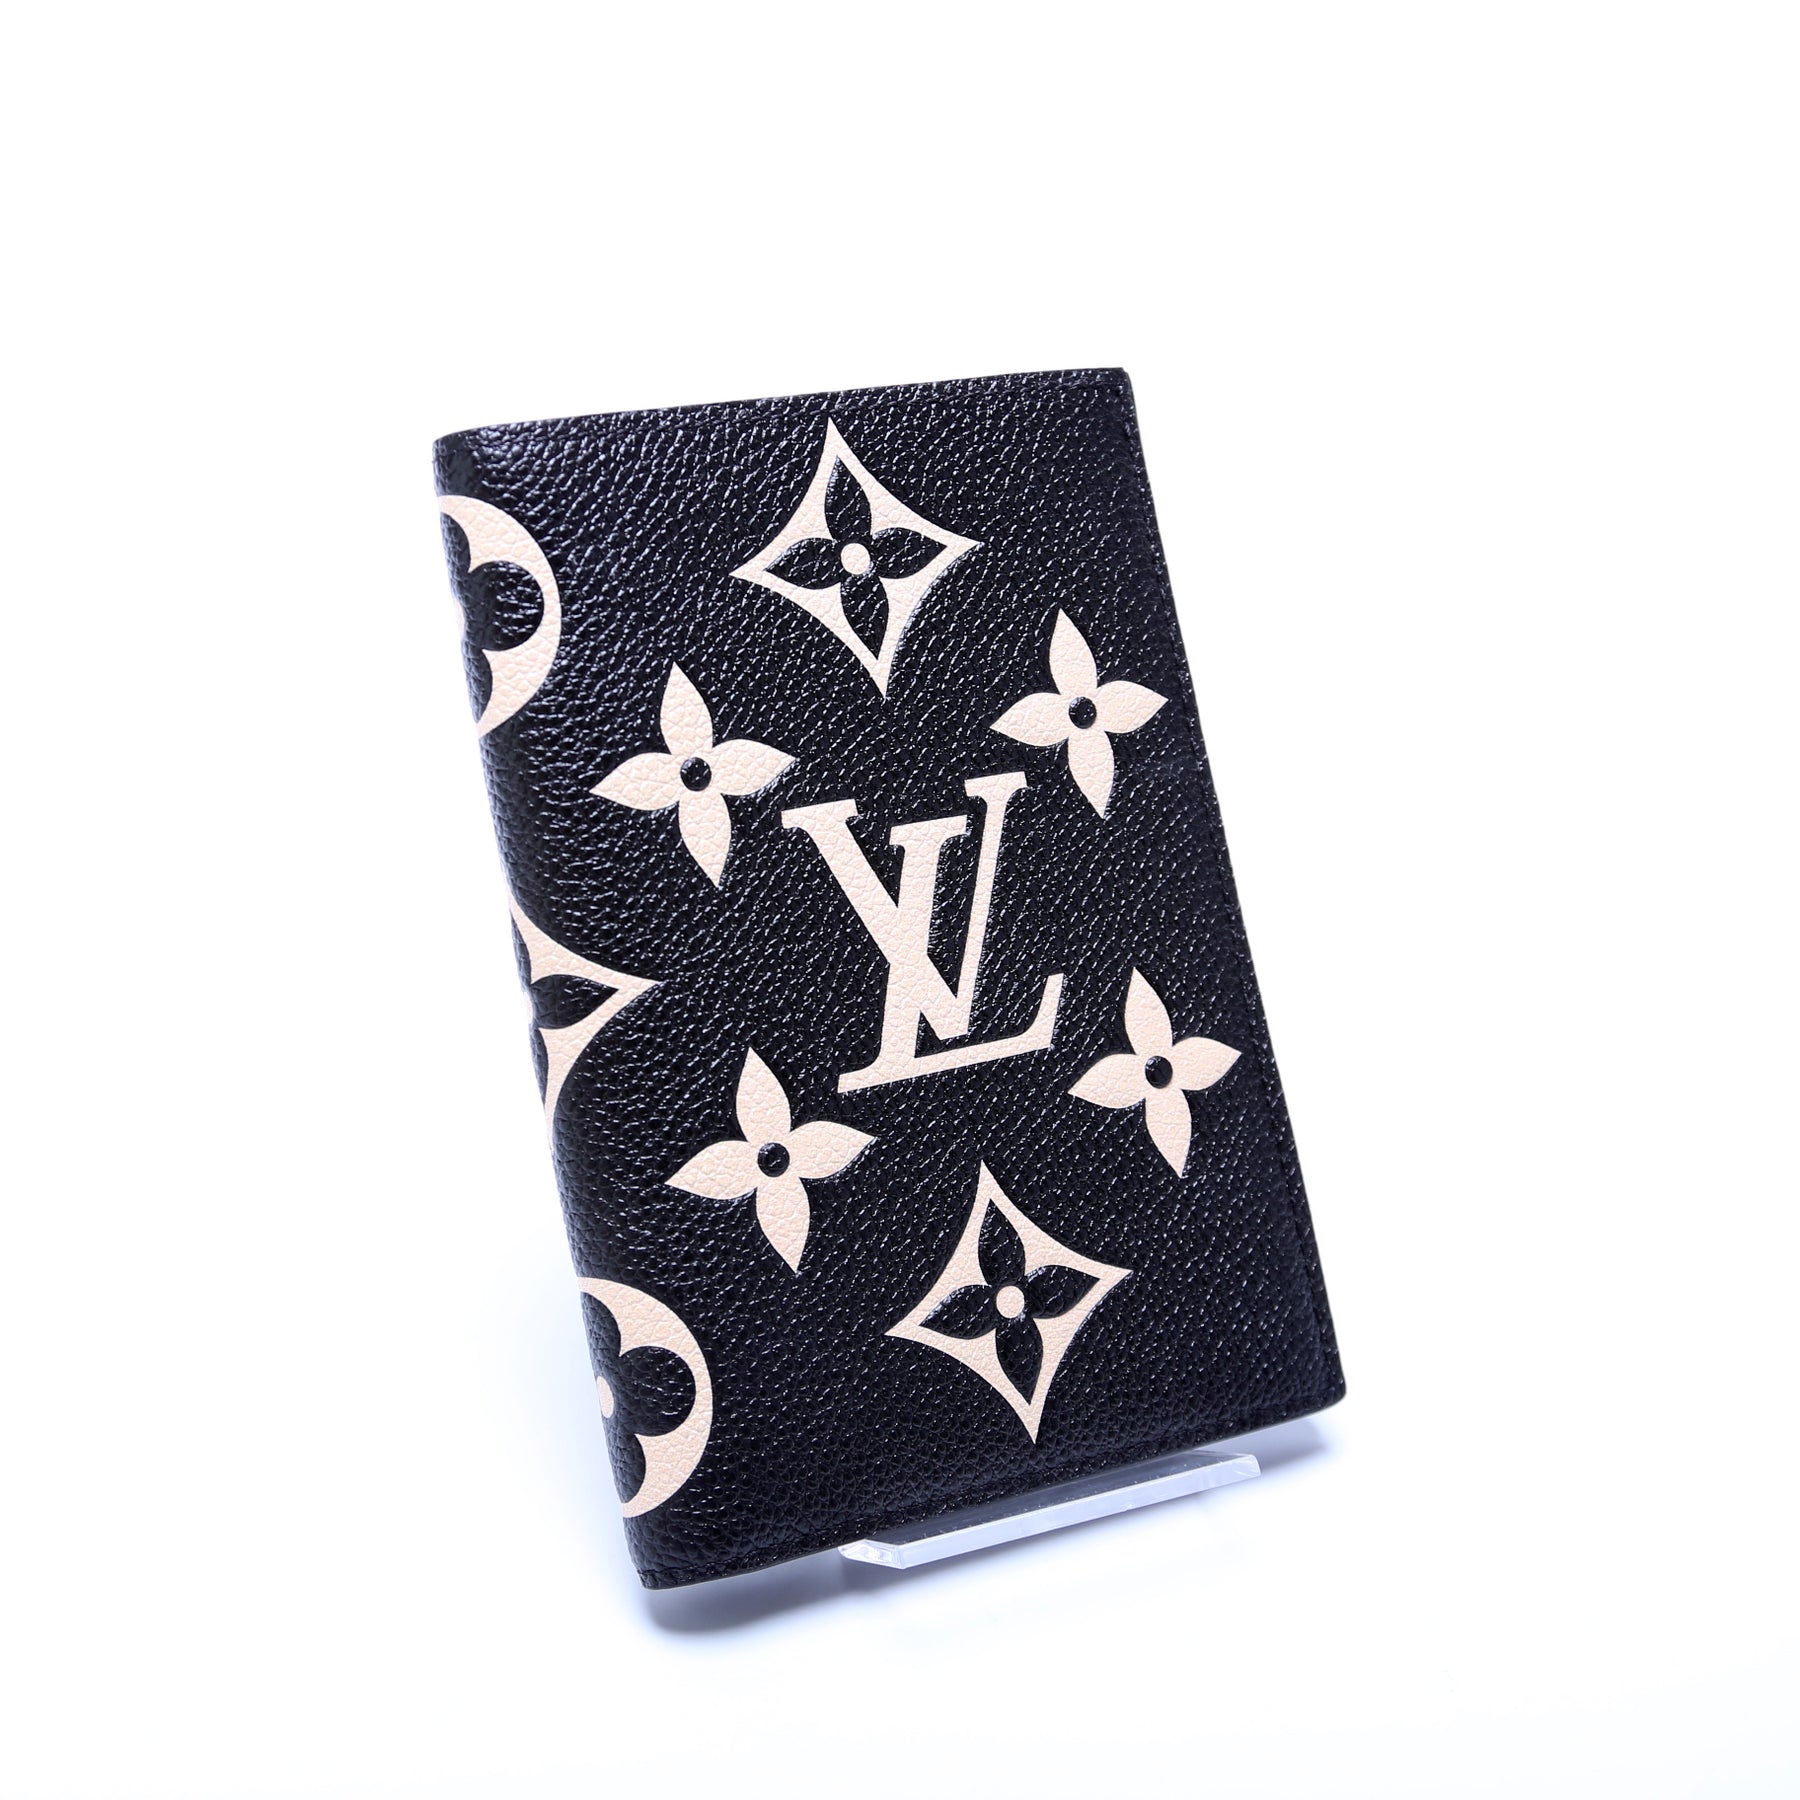 Louis Vuitton Monogram Empreinte Passport Cover, Black